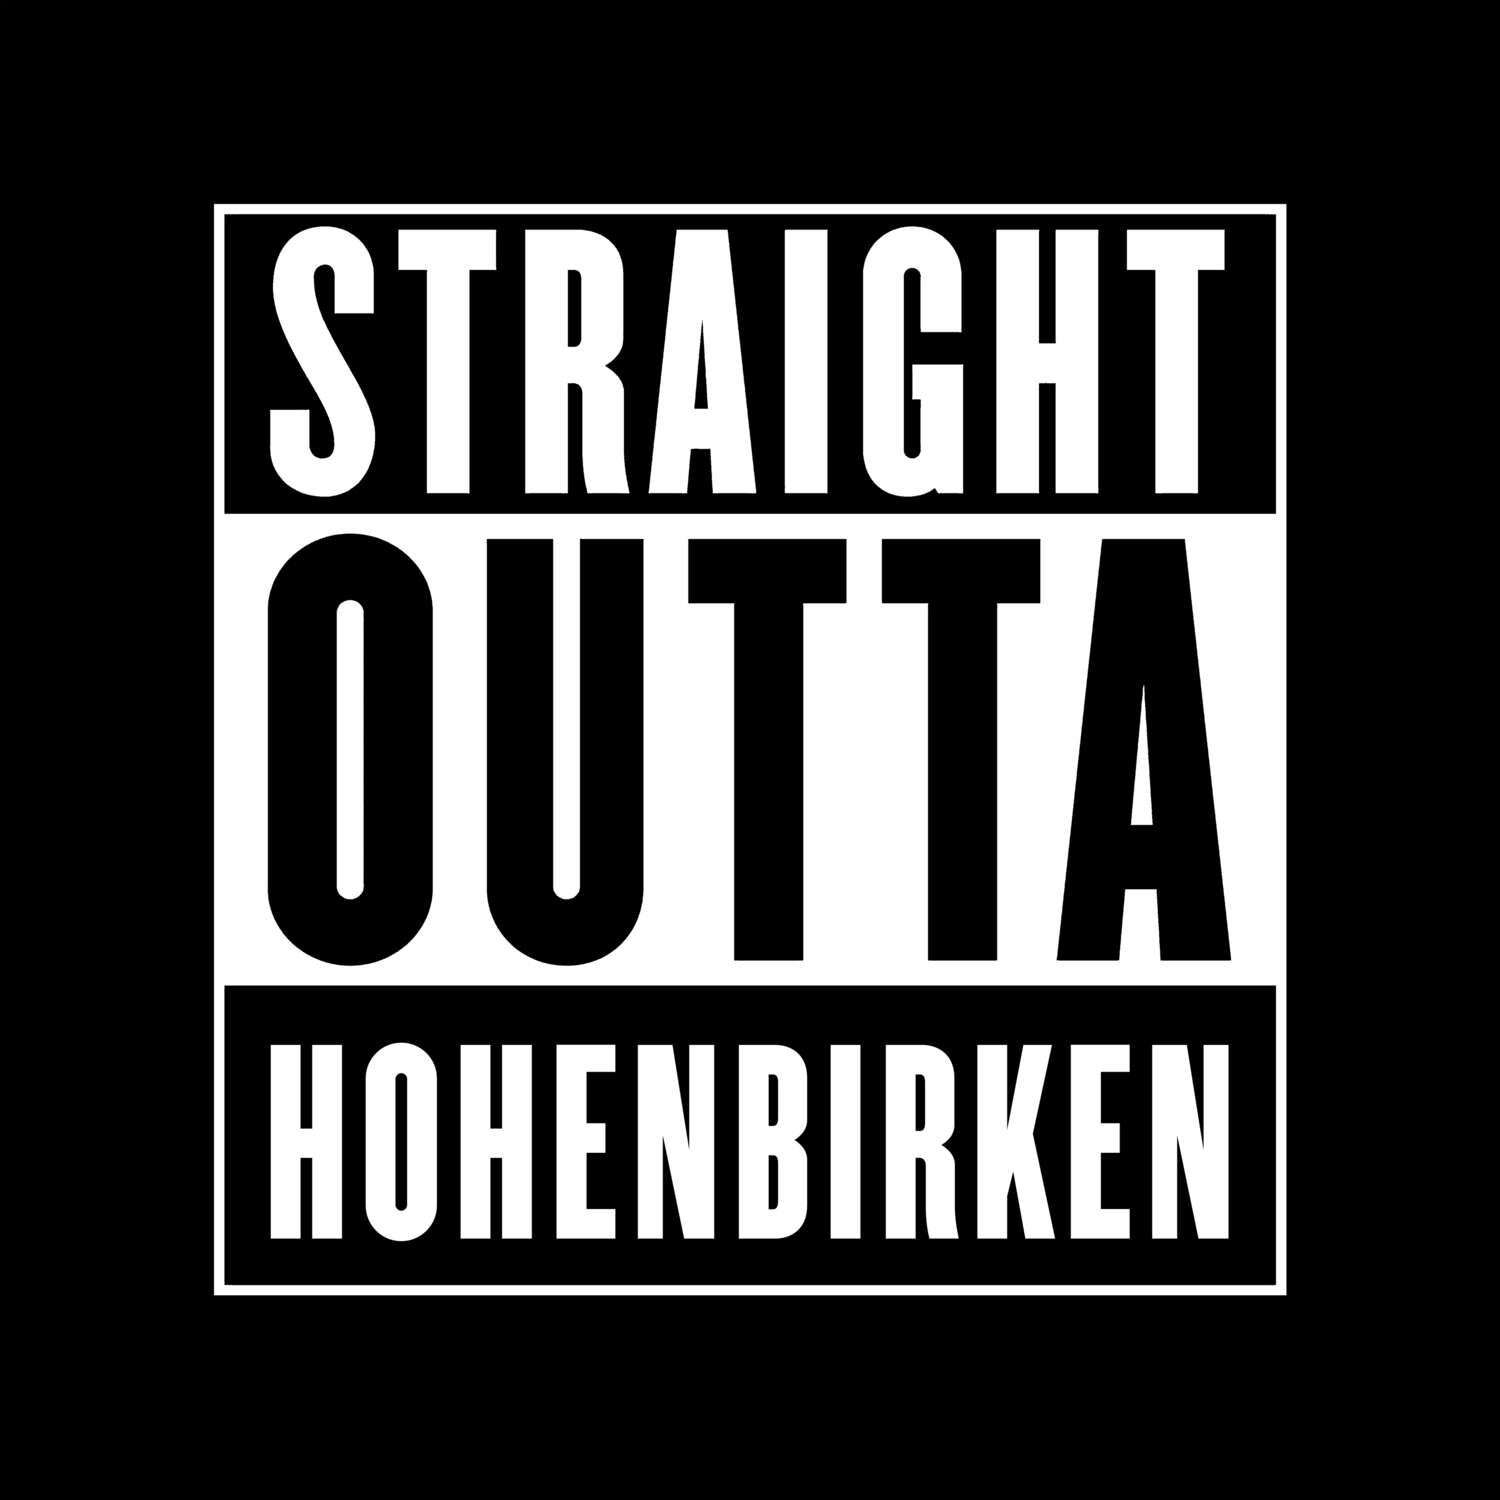 Hohenbirken T-Shirt »Straight Outta«